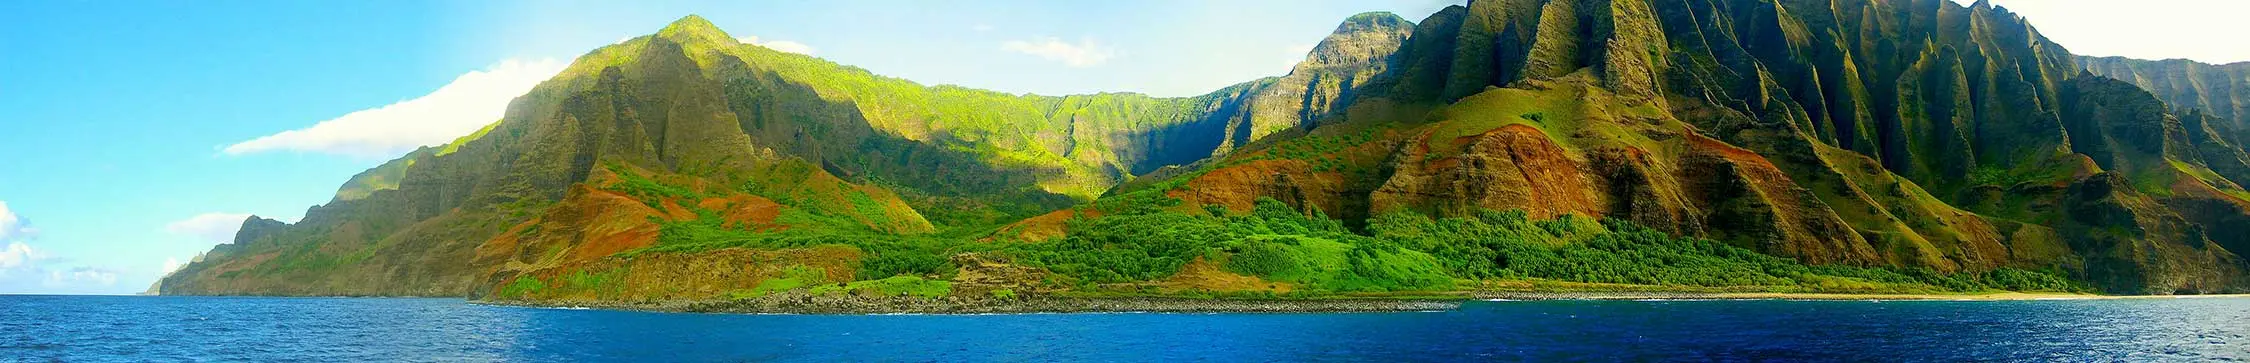 kauai-hawaii-banner